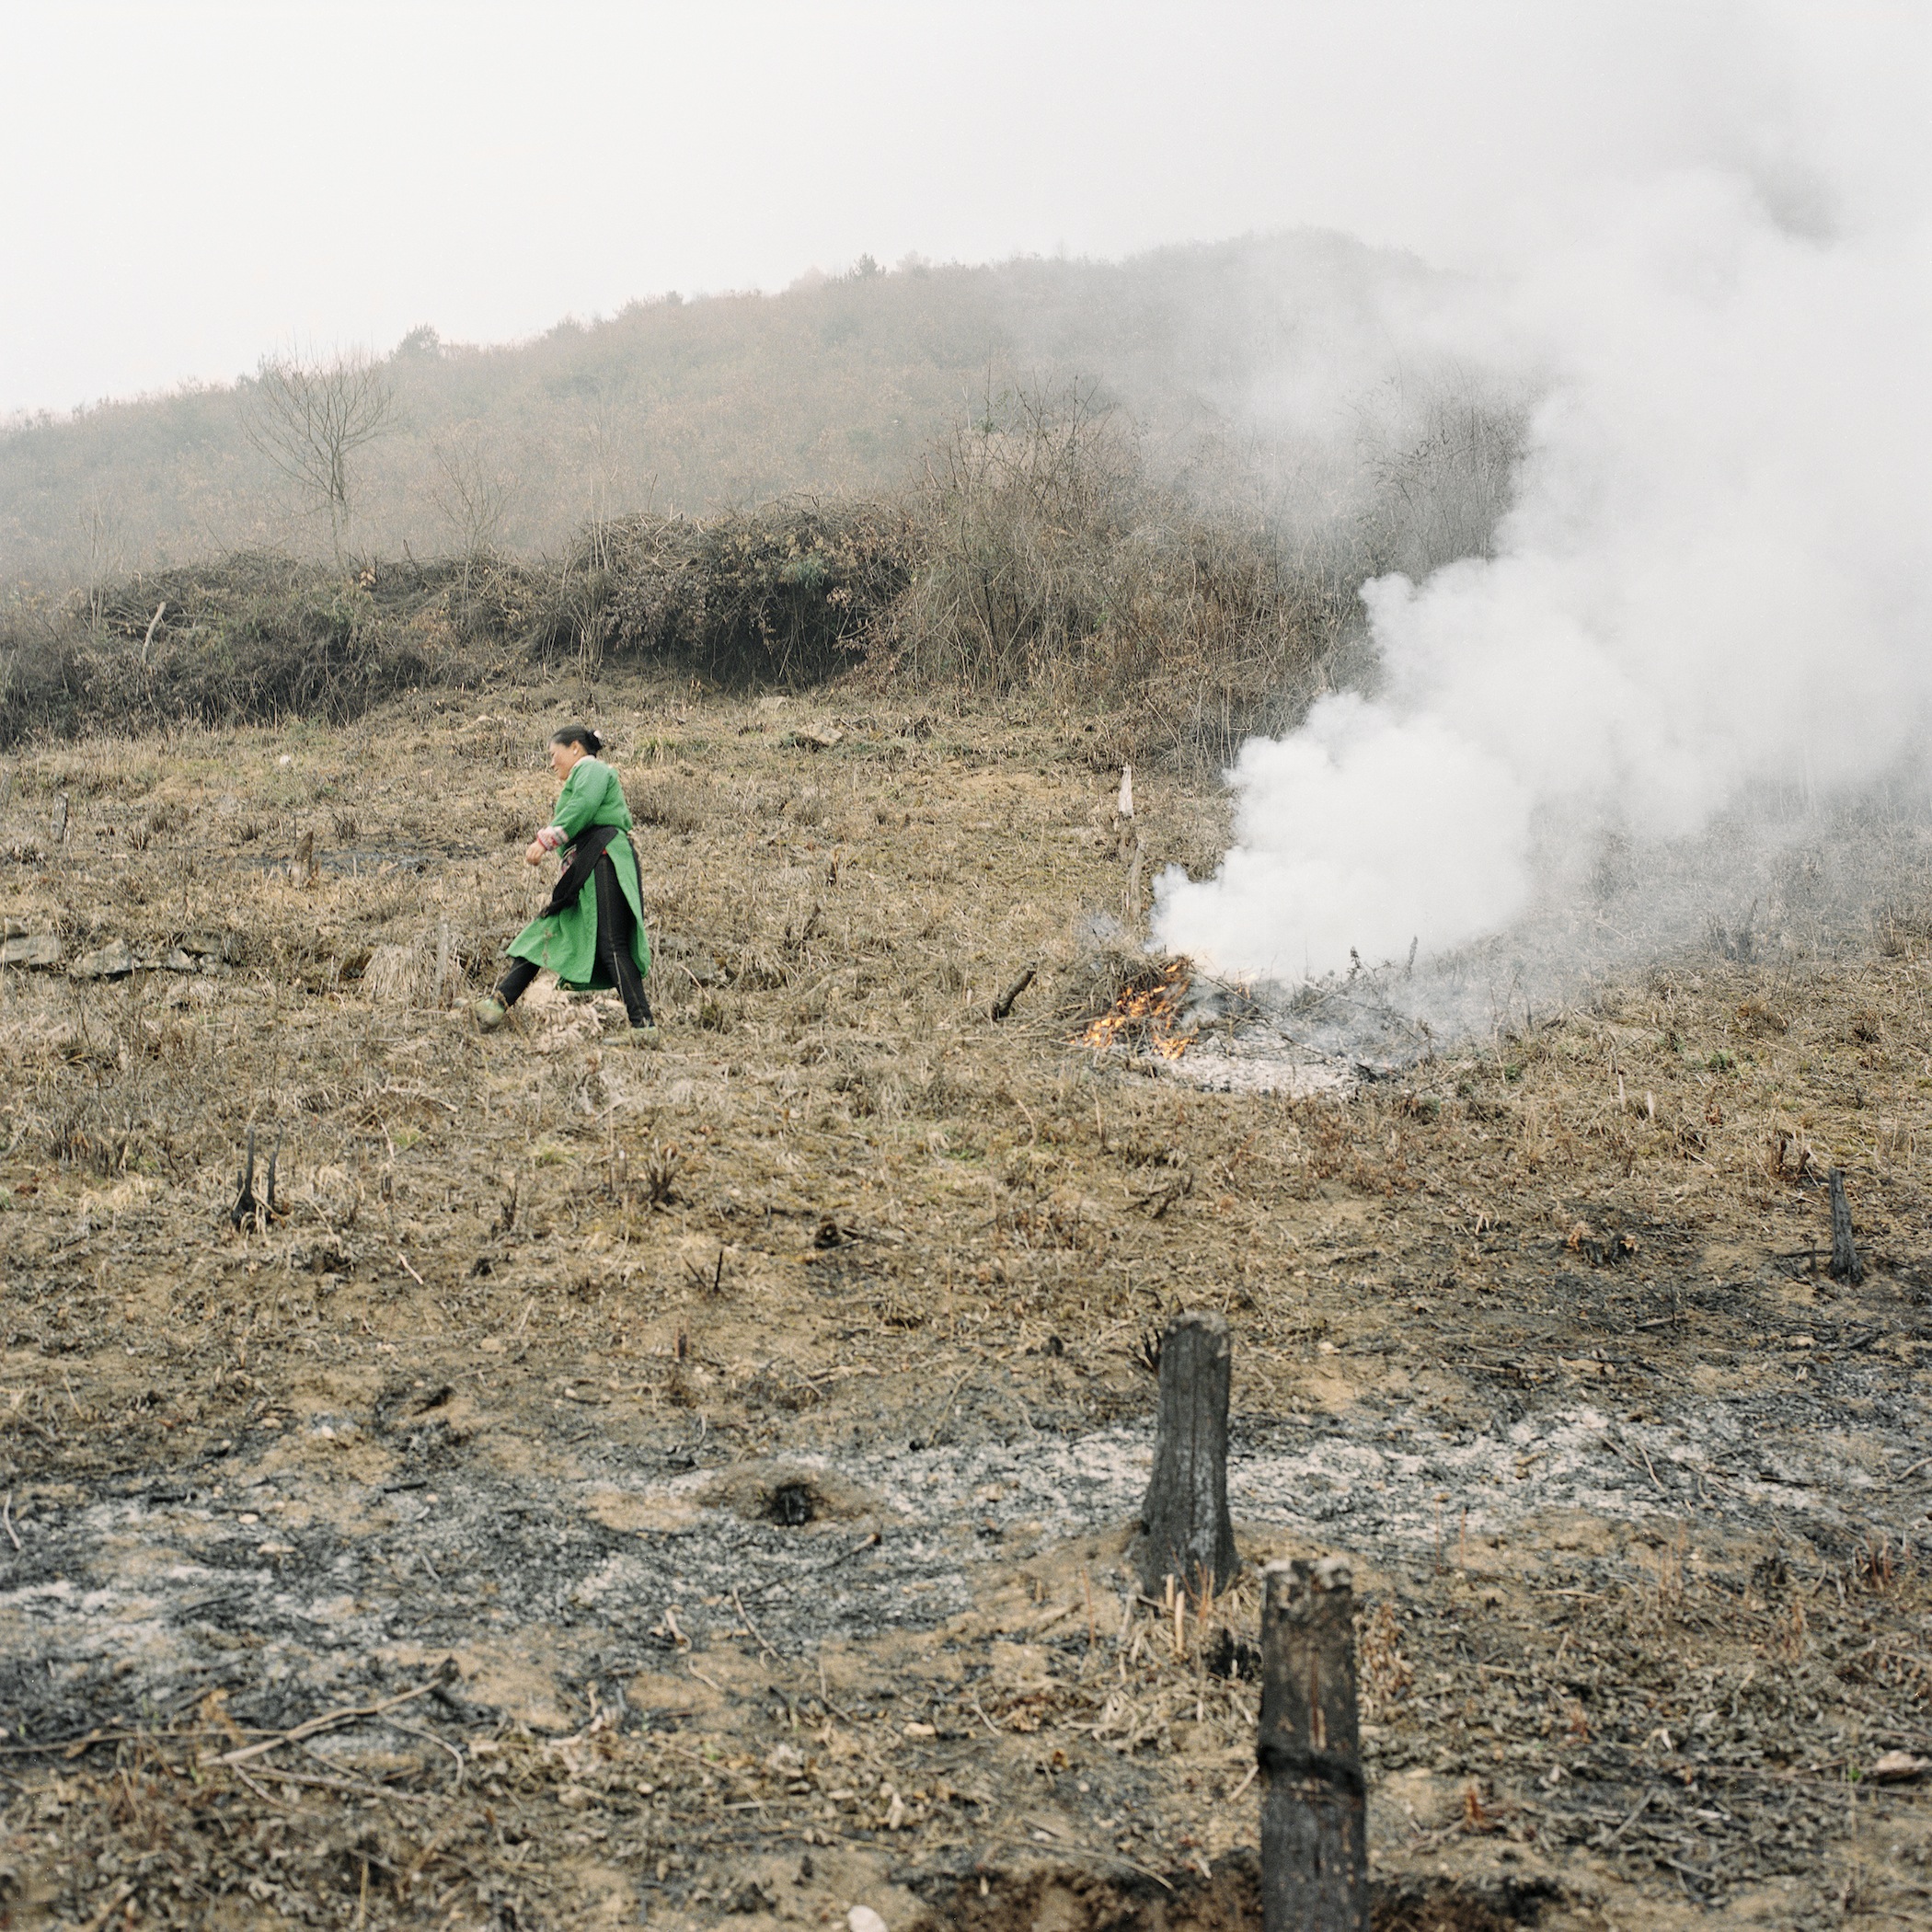 Burning Wild Grass on Deserted Farmland, Radish Village, Sichuan, China, March 2016